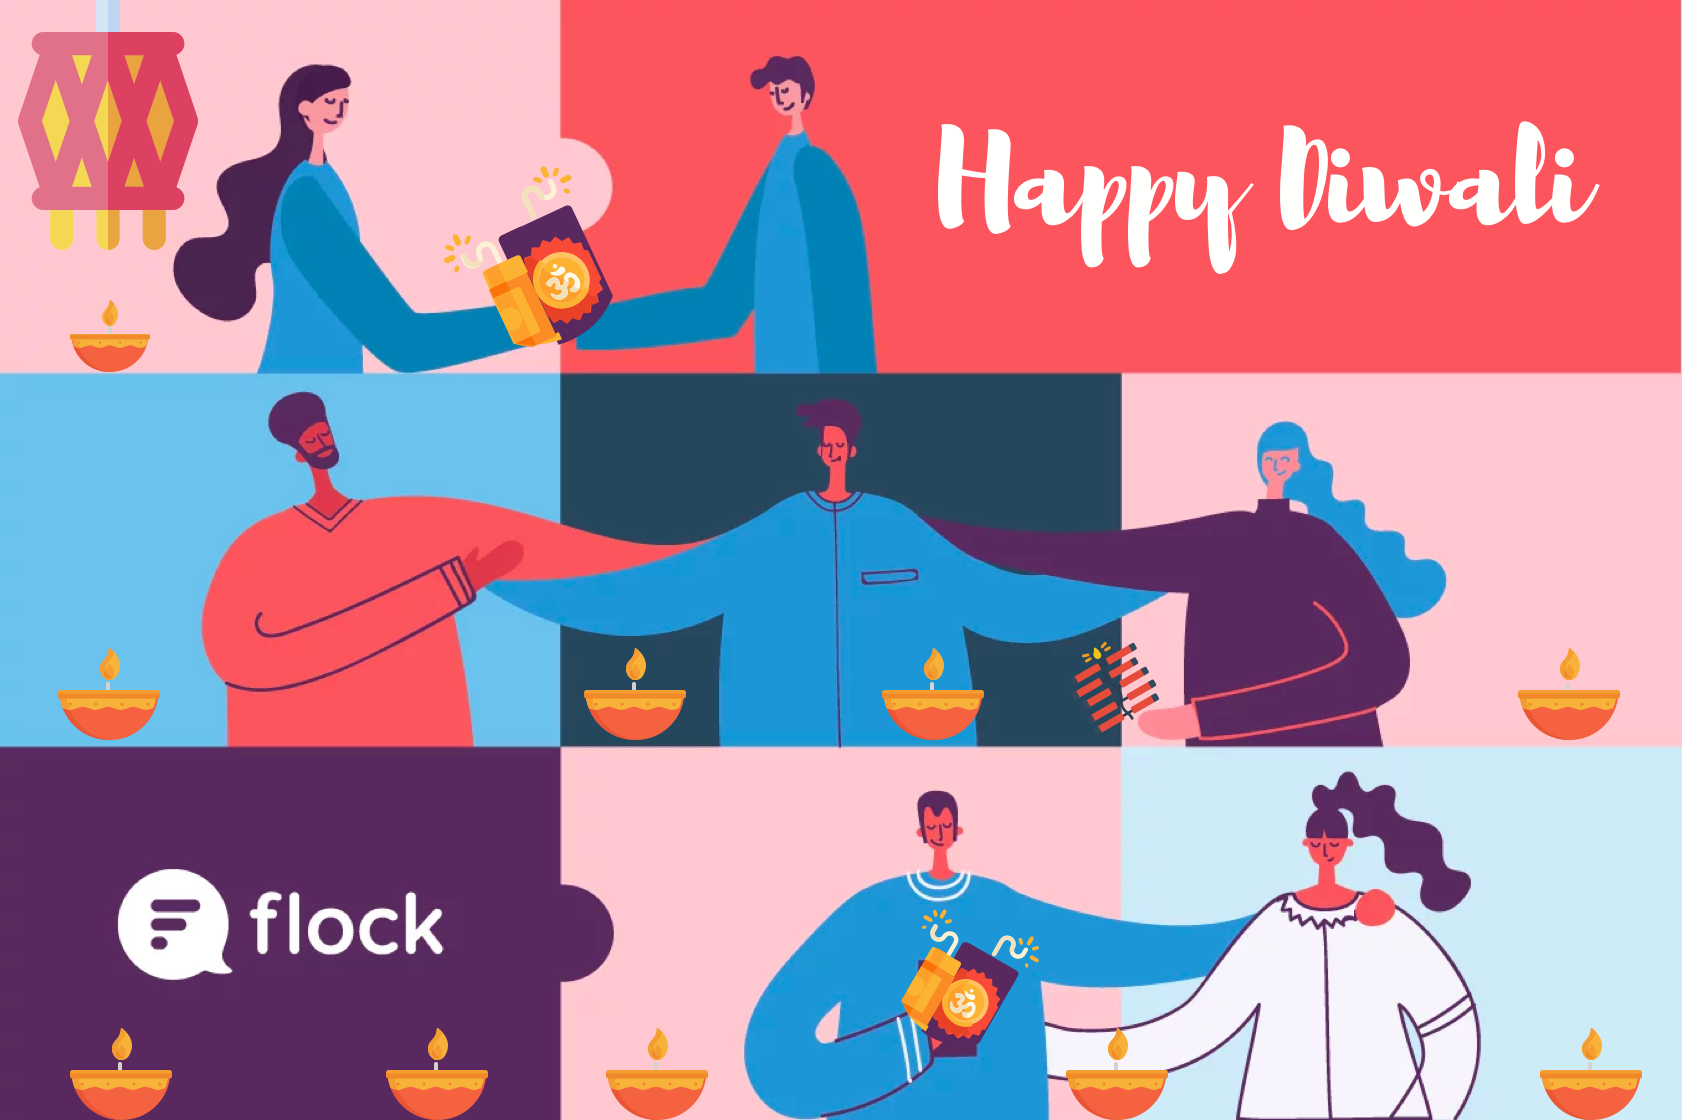 Wishing you a happy Diwali!